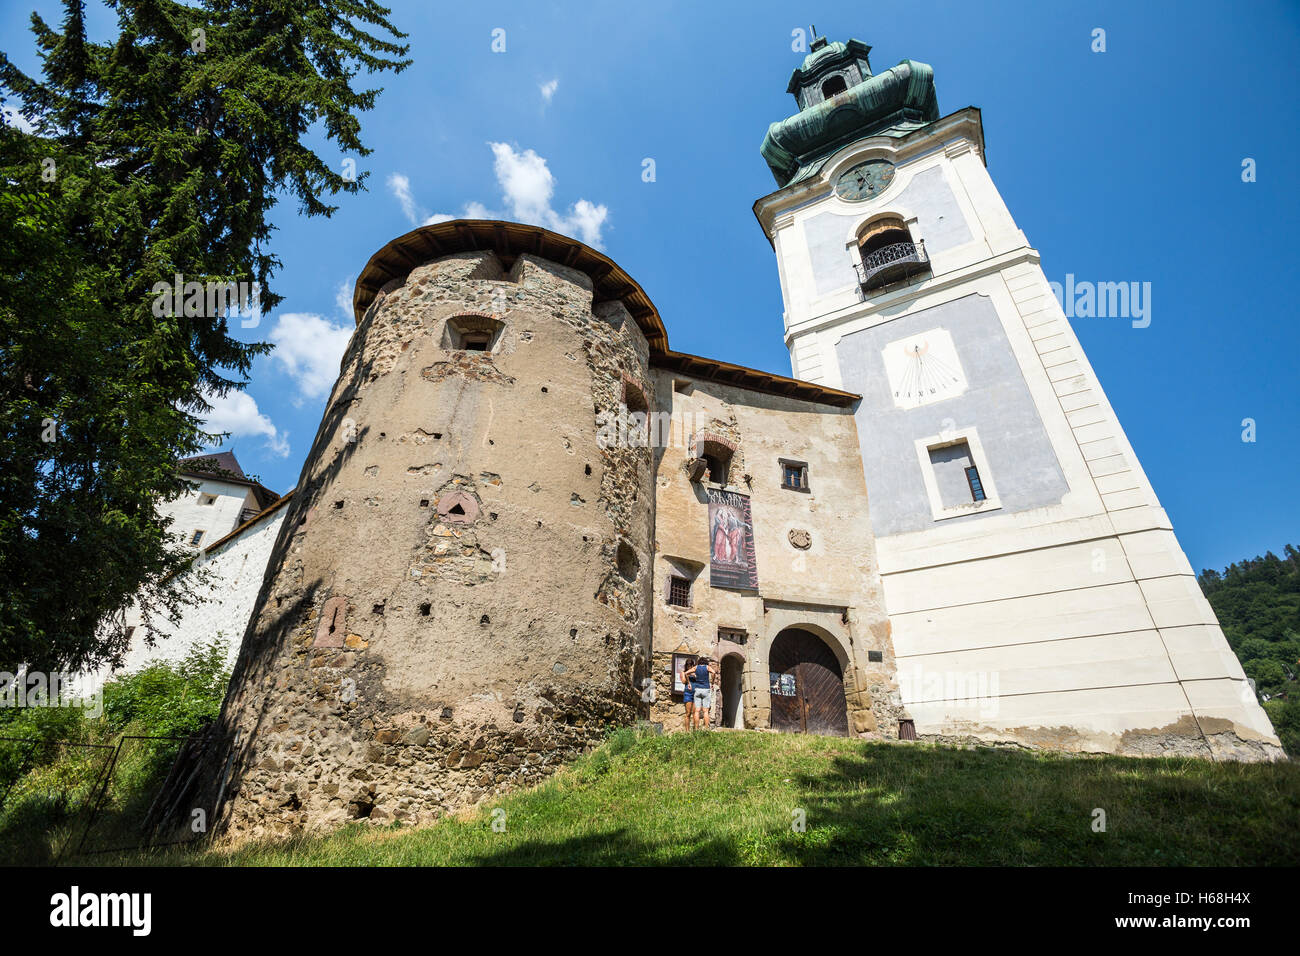 Banska Stiavnica, Slovakia - august 06, 2015: Main entrance to the Old castle in Banska Stiavnica, Slovakia. Stock Photo